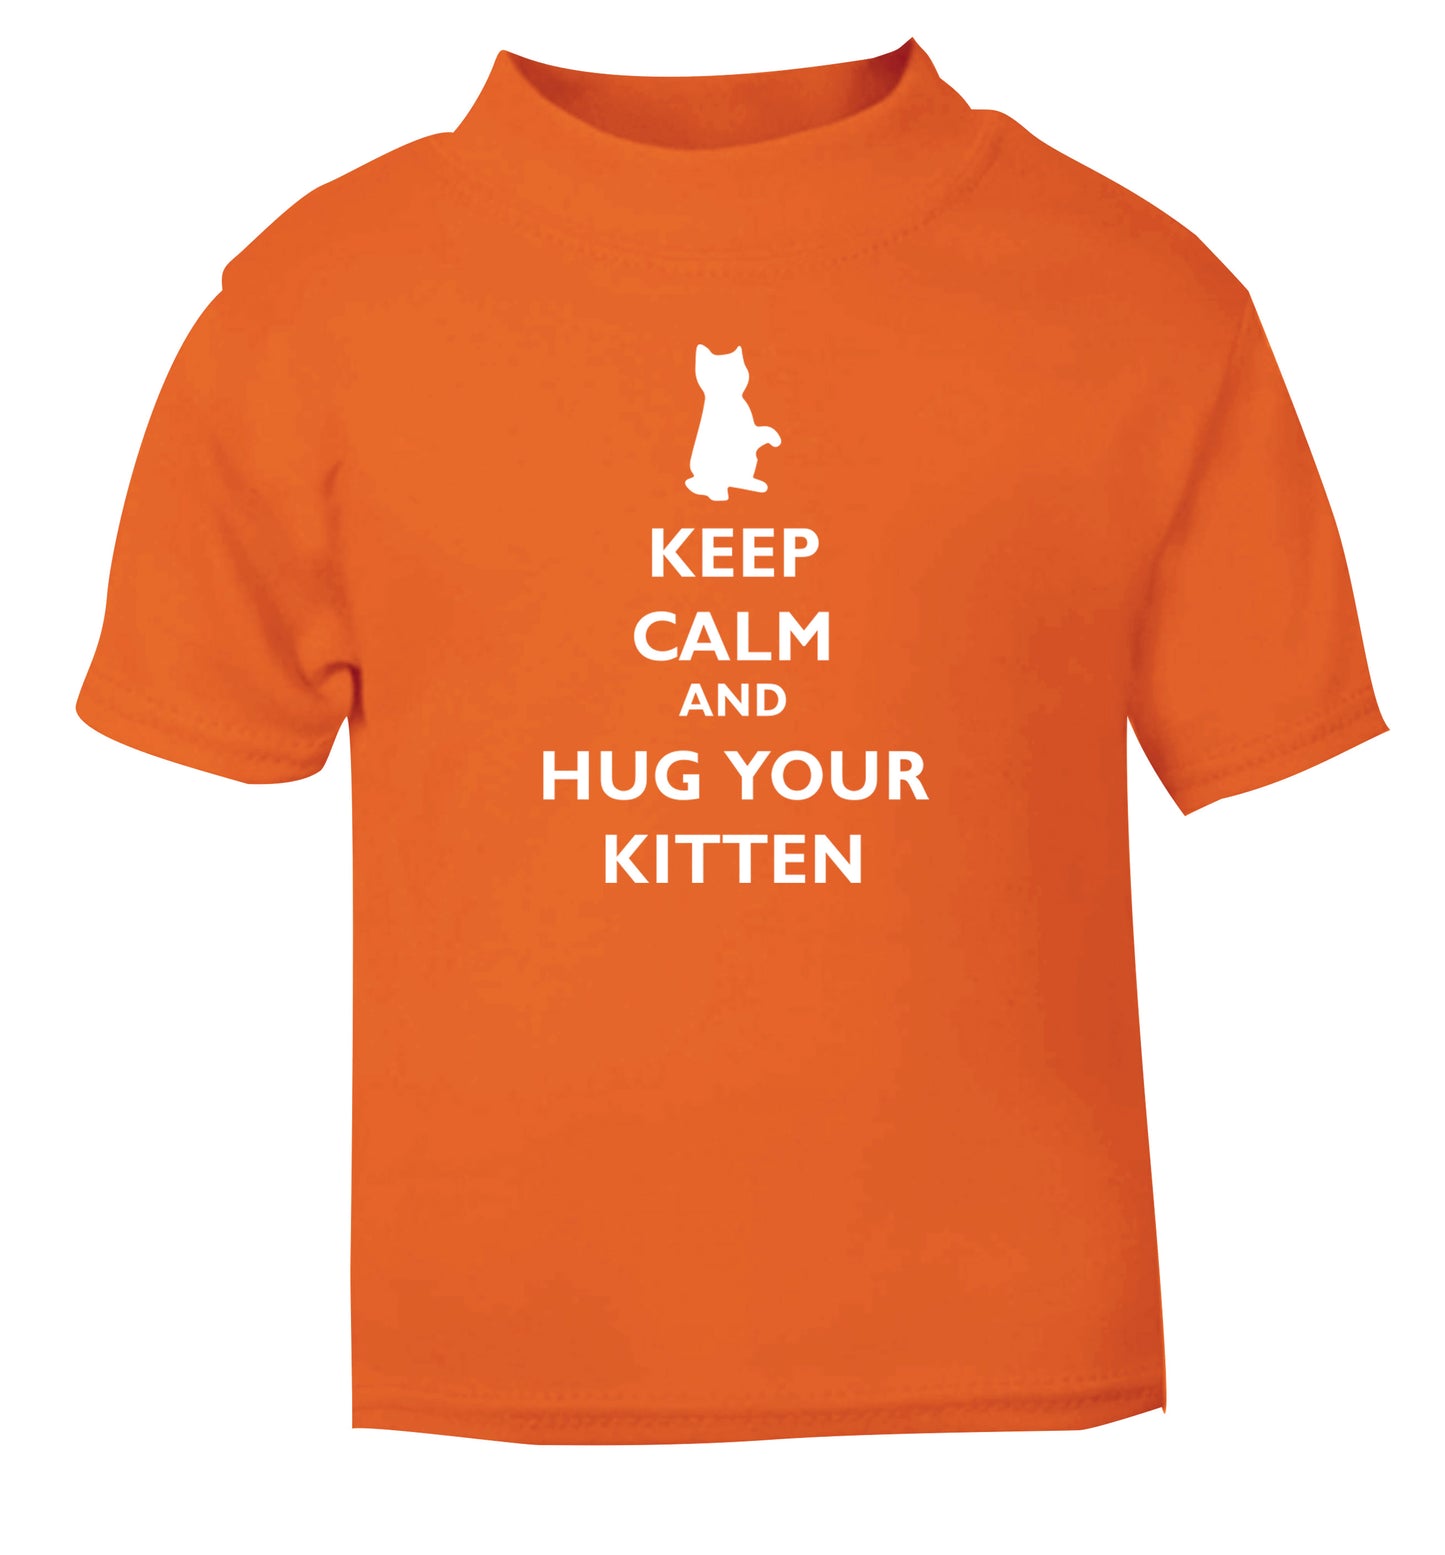 Keep calm and hug your kitten orange Baby Toddler Tshirt 2 Years